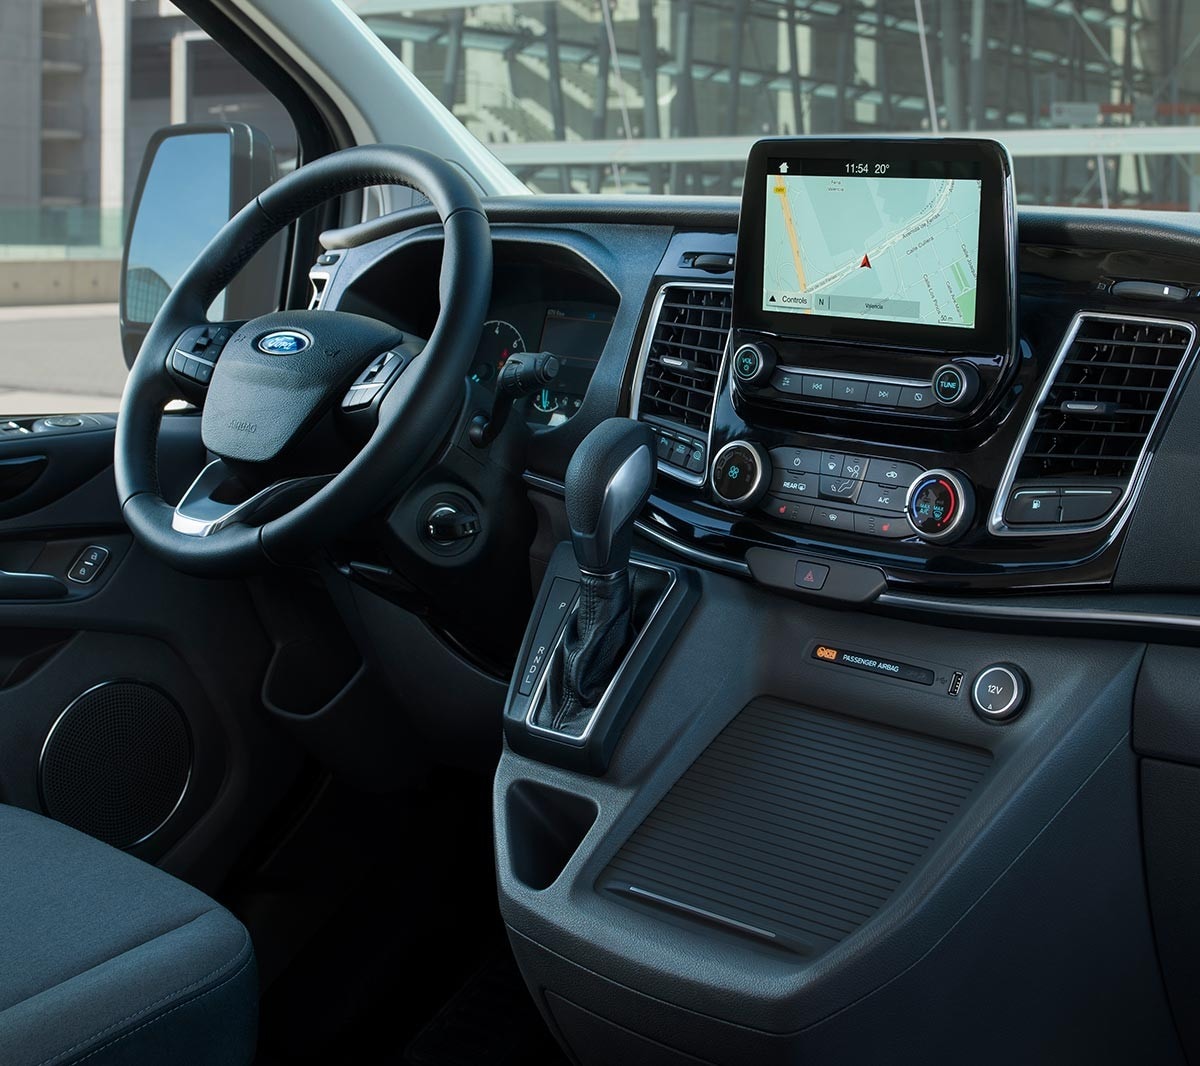 New Tourneo Custom interior view with SYNC 3